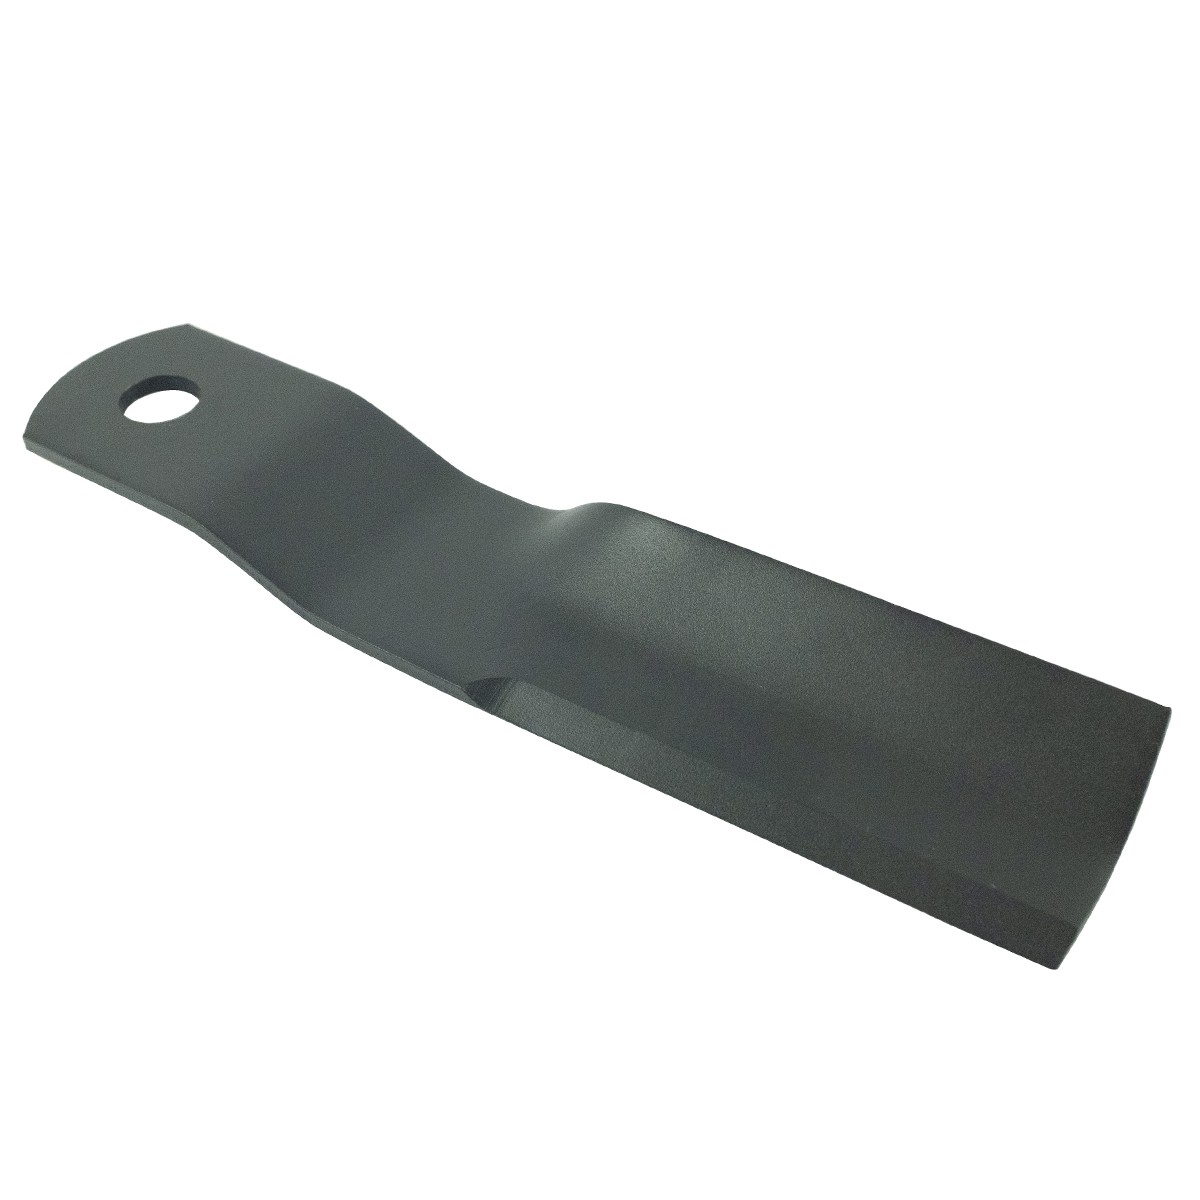 Cutting knife RIGHT 283 x 60 mm / Iseki SCMA60 / Iseki SF450 / 8675-306-001-00